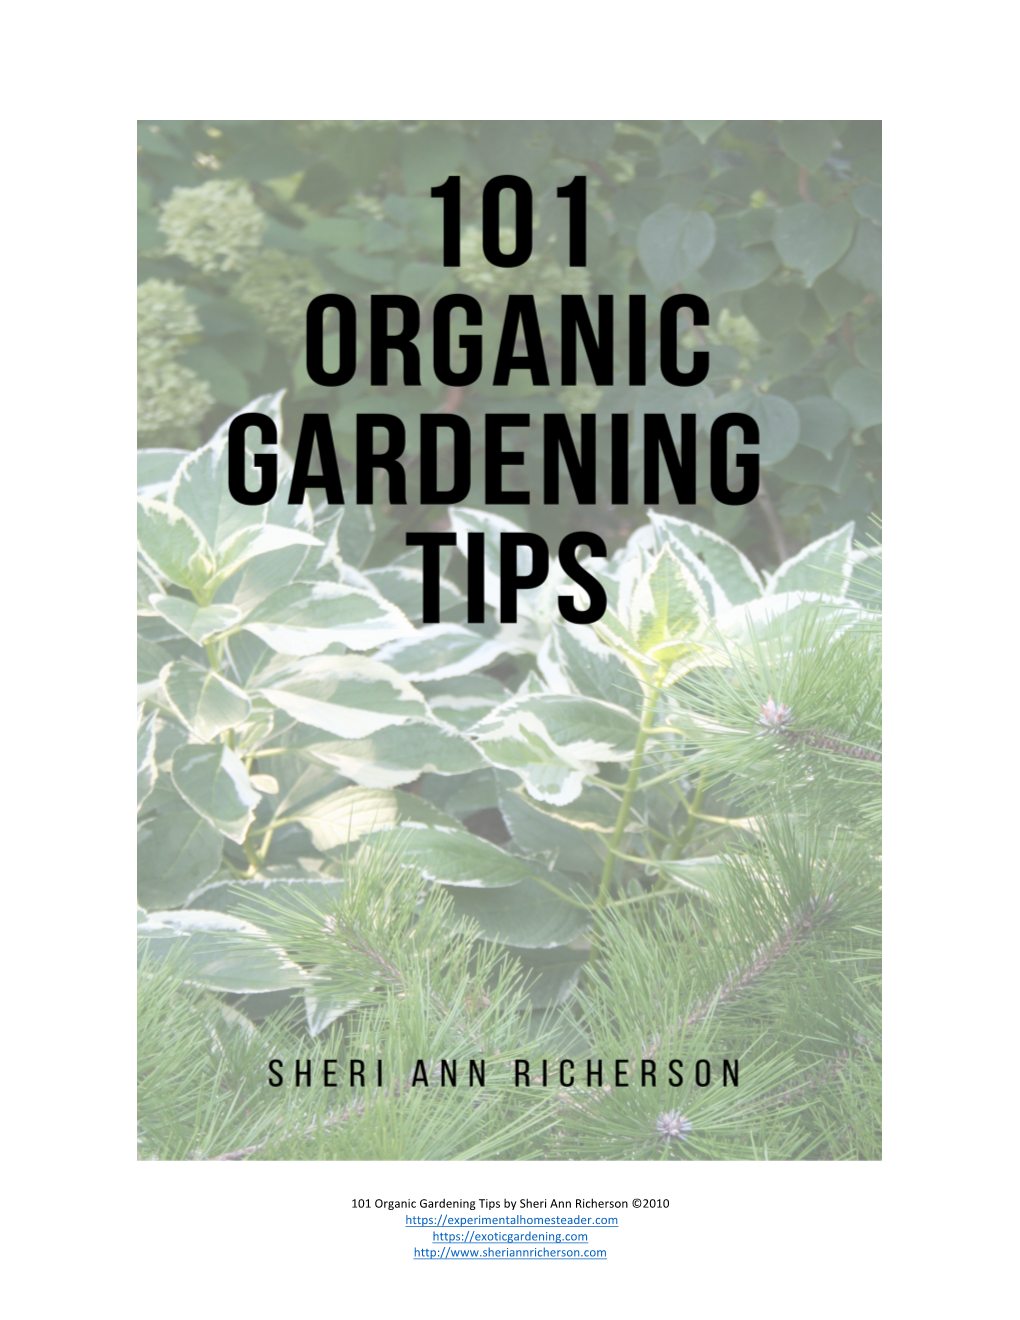 101 Organic Gardeningtips by Sheri Ann Richerson